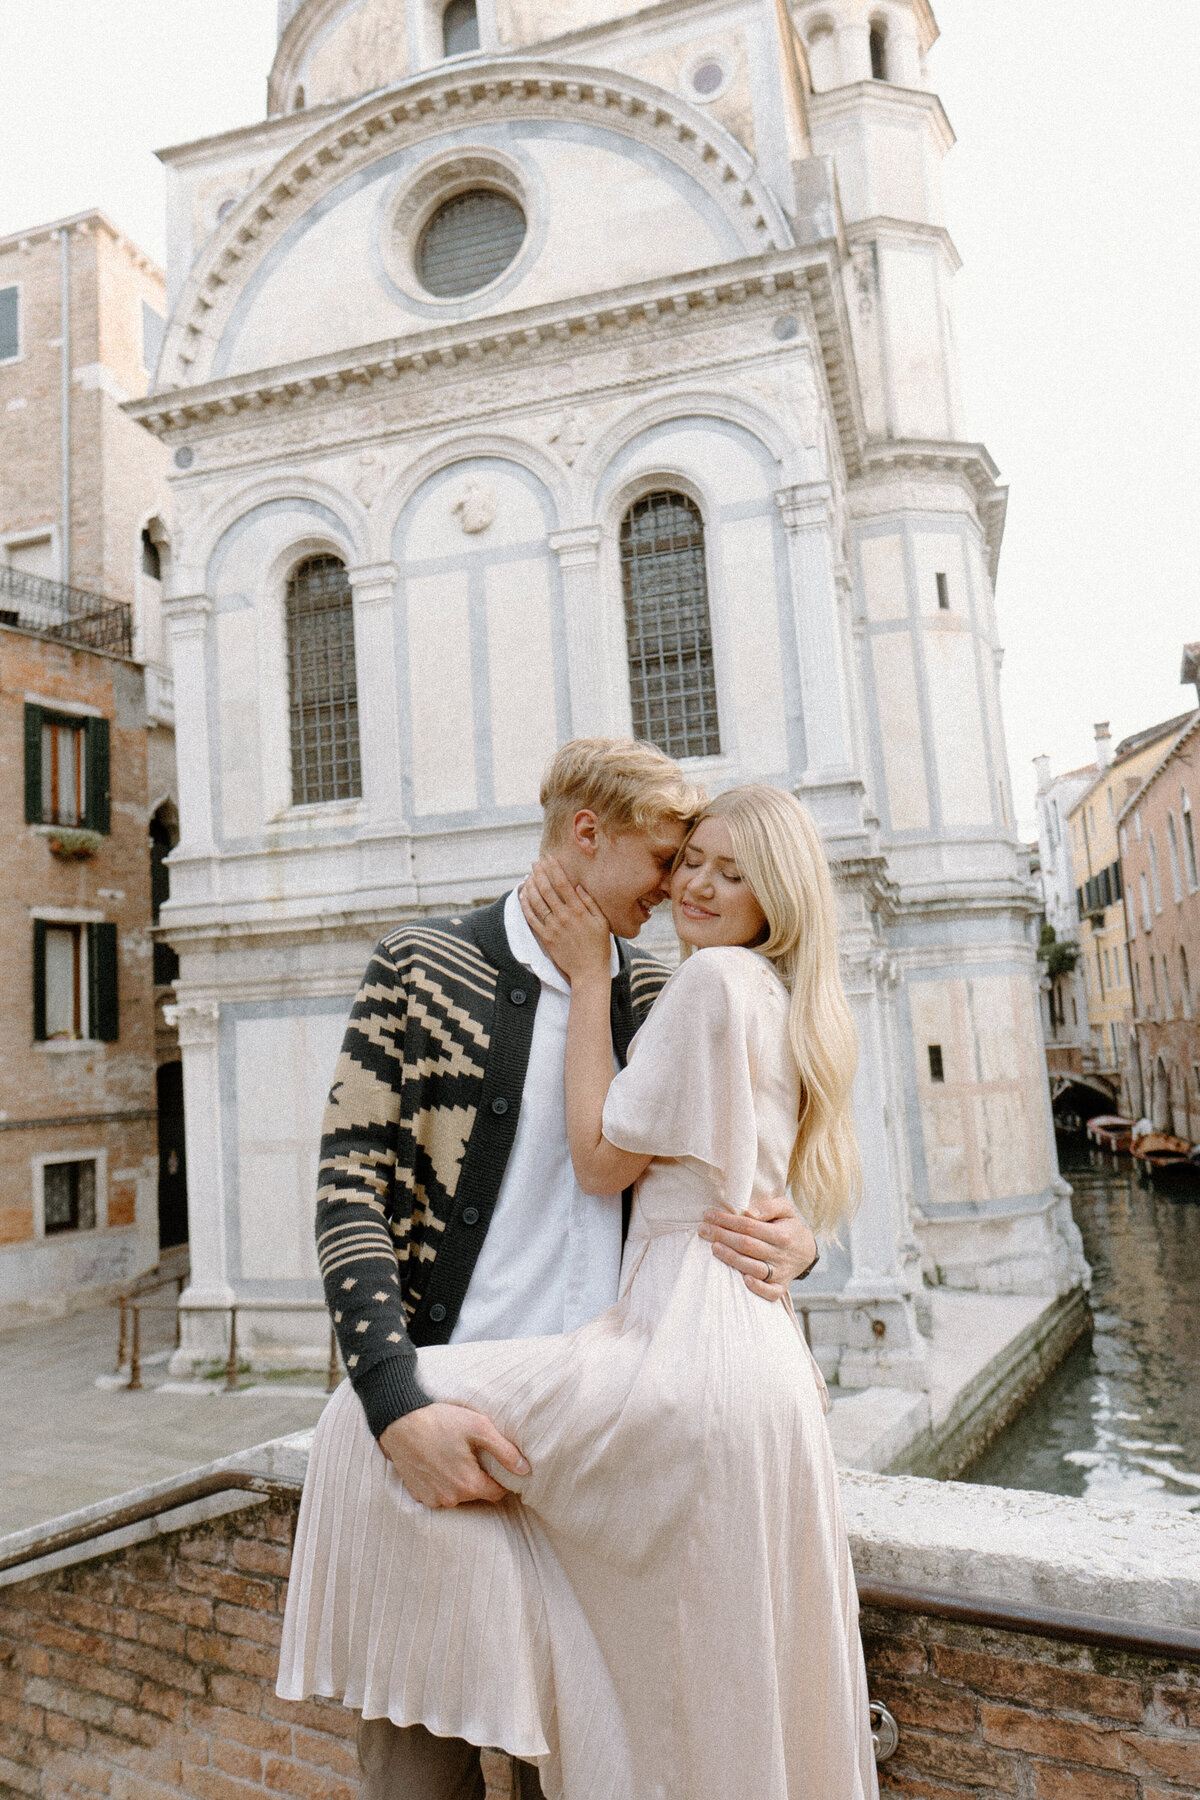 Documentary-Style-Editorial-Vogue-Italy-Destination-Wedding-Leah-Gunn-Photography-63